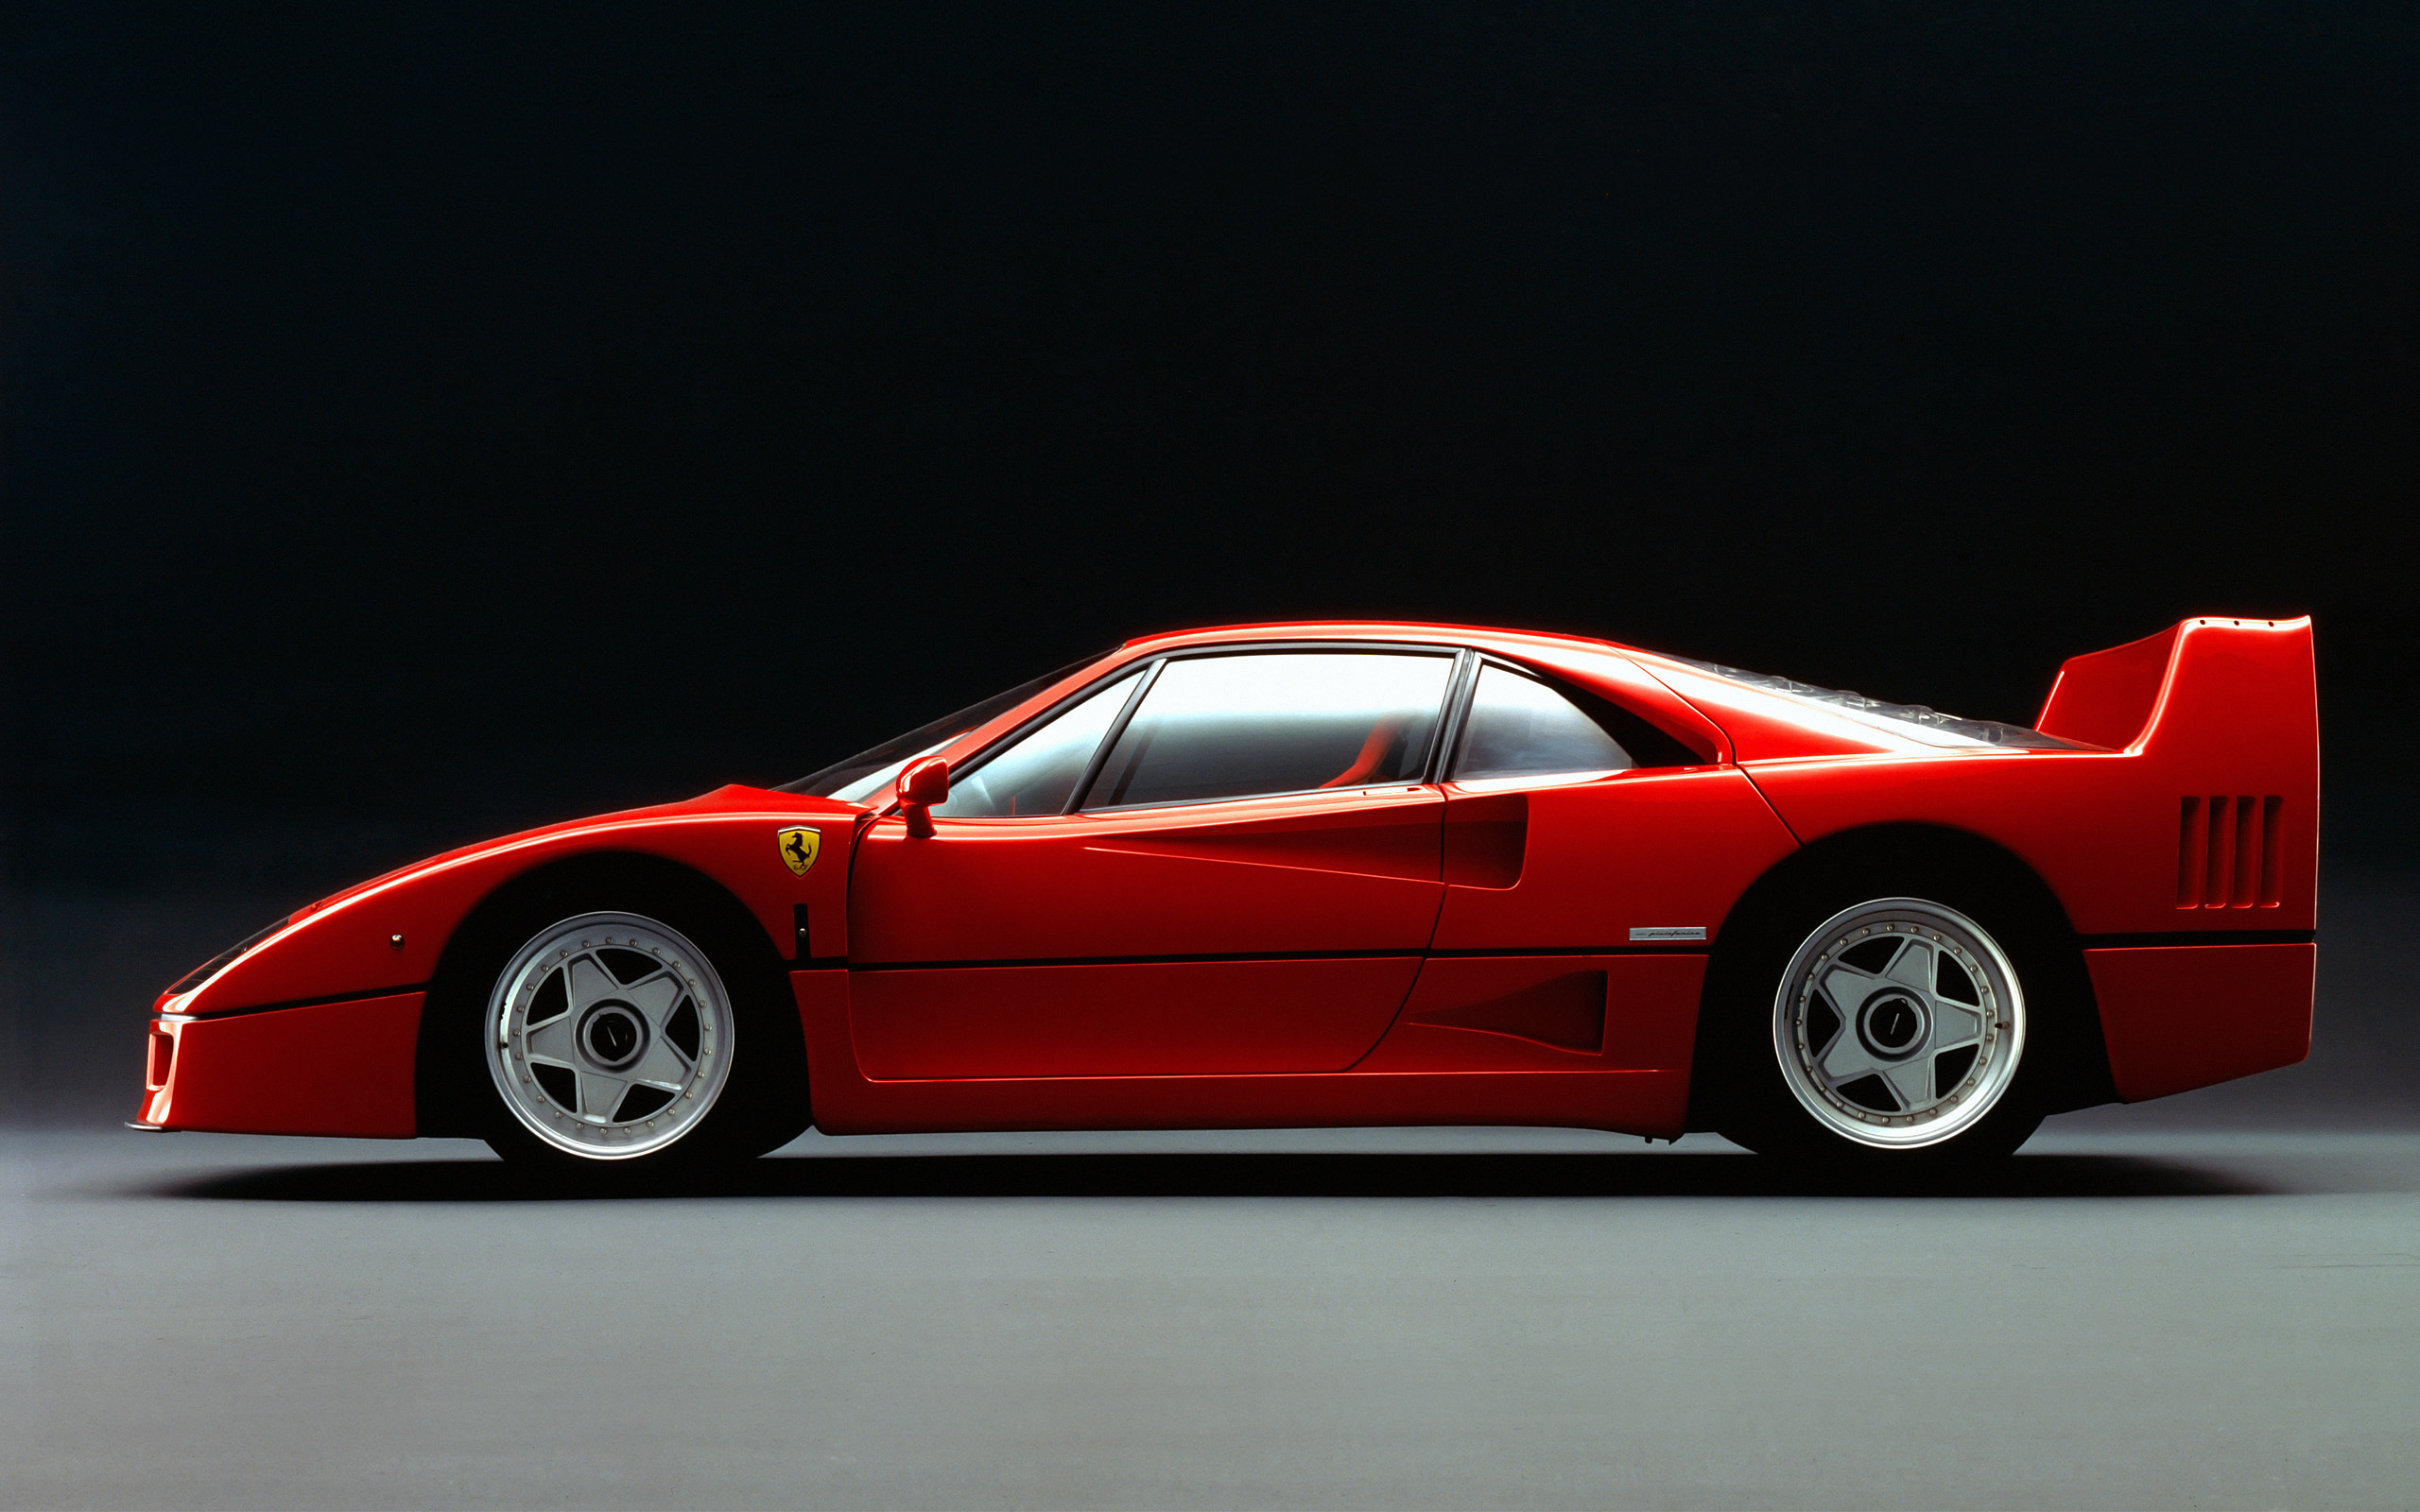  1987 Ferrari F40 Wallpaper.